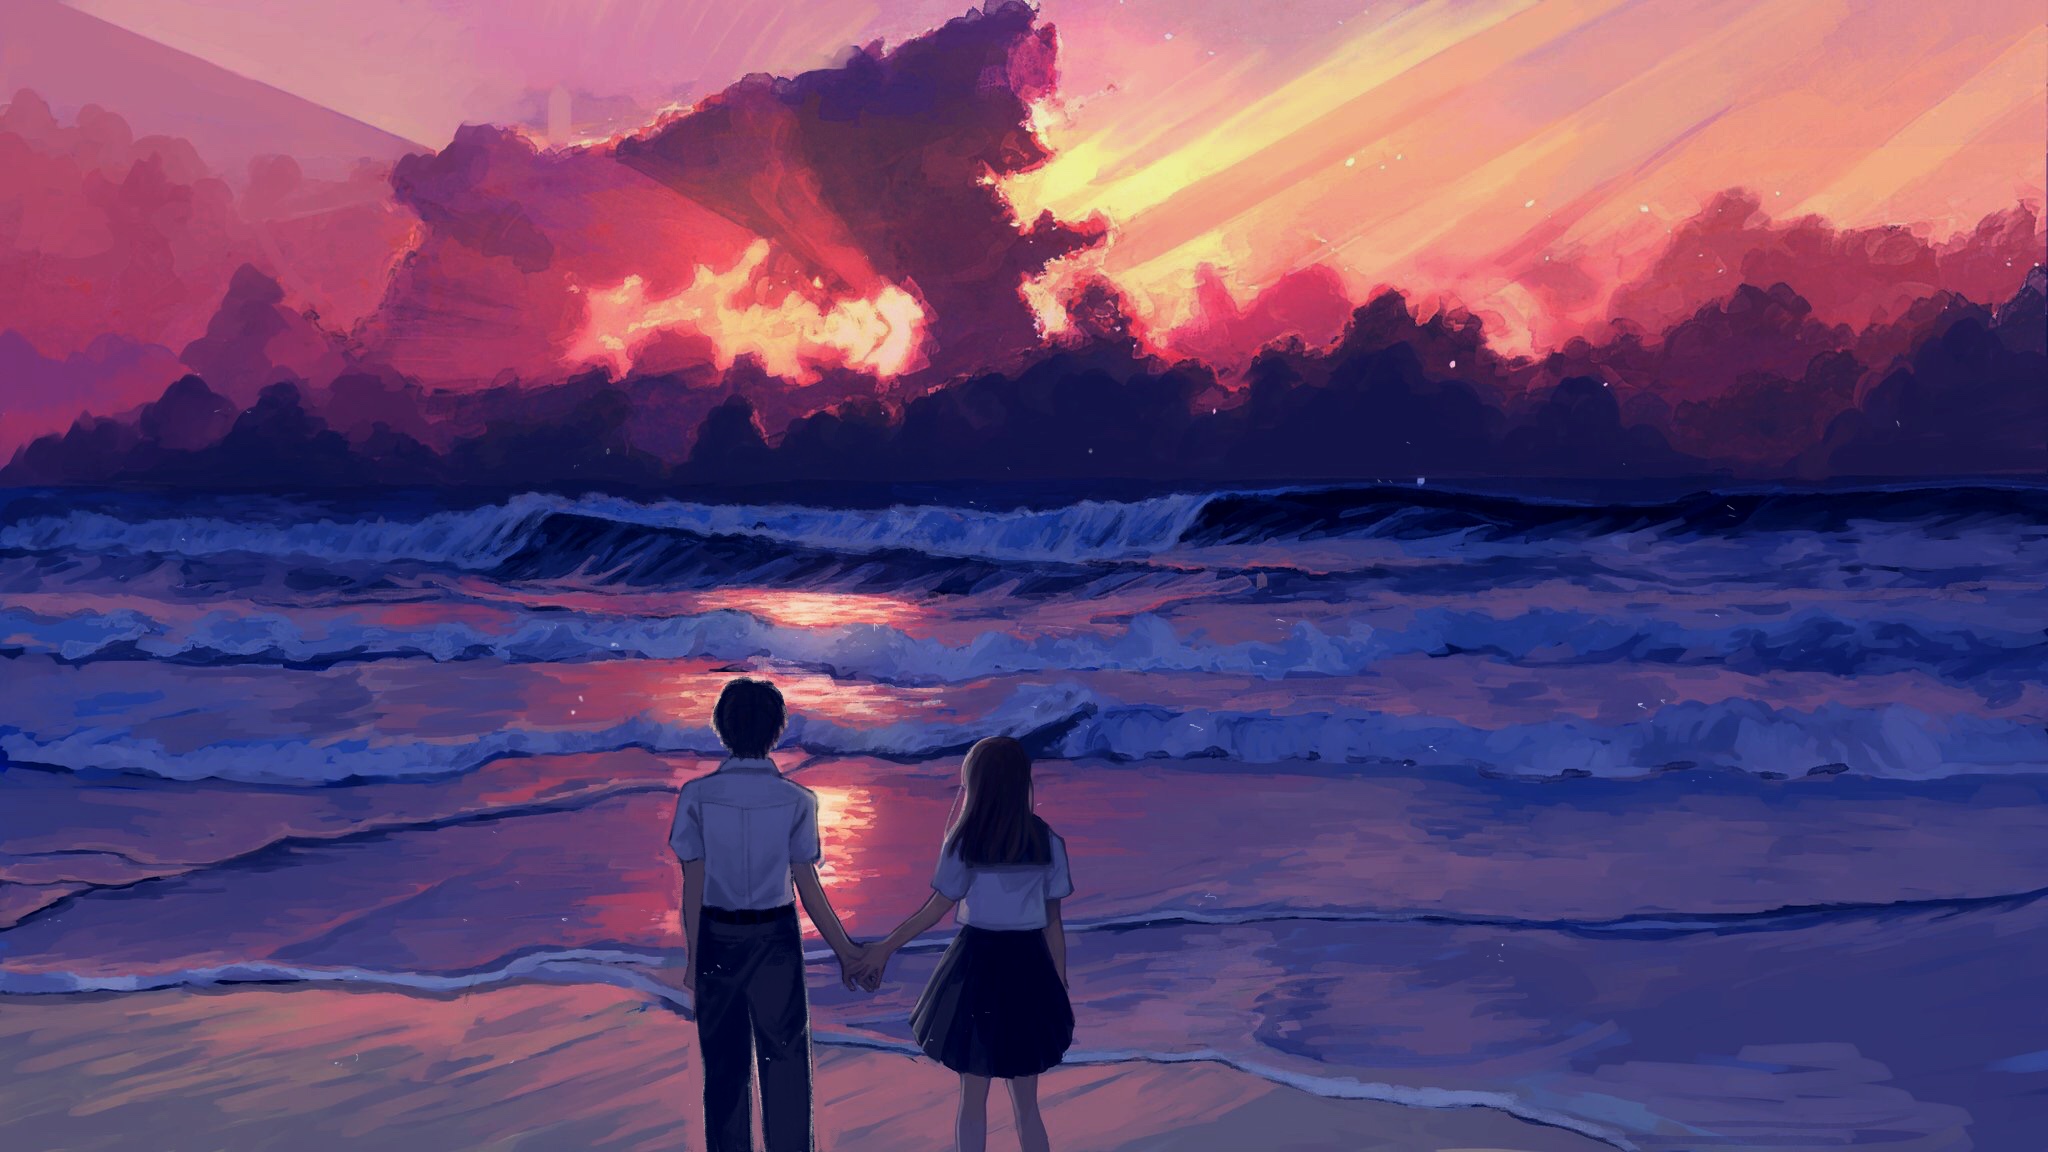 Anime 2048x1152 anime illustration landscape sea sunset painting digital art artwork moescape